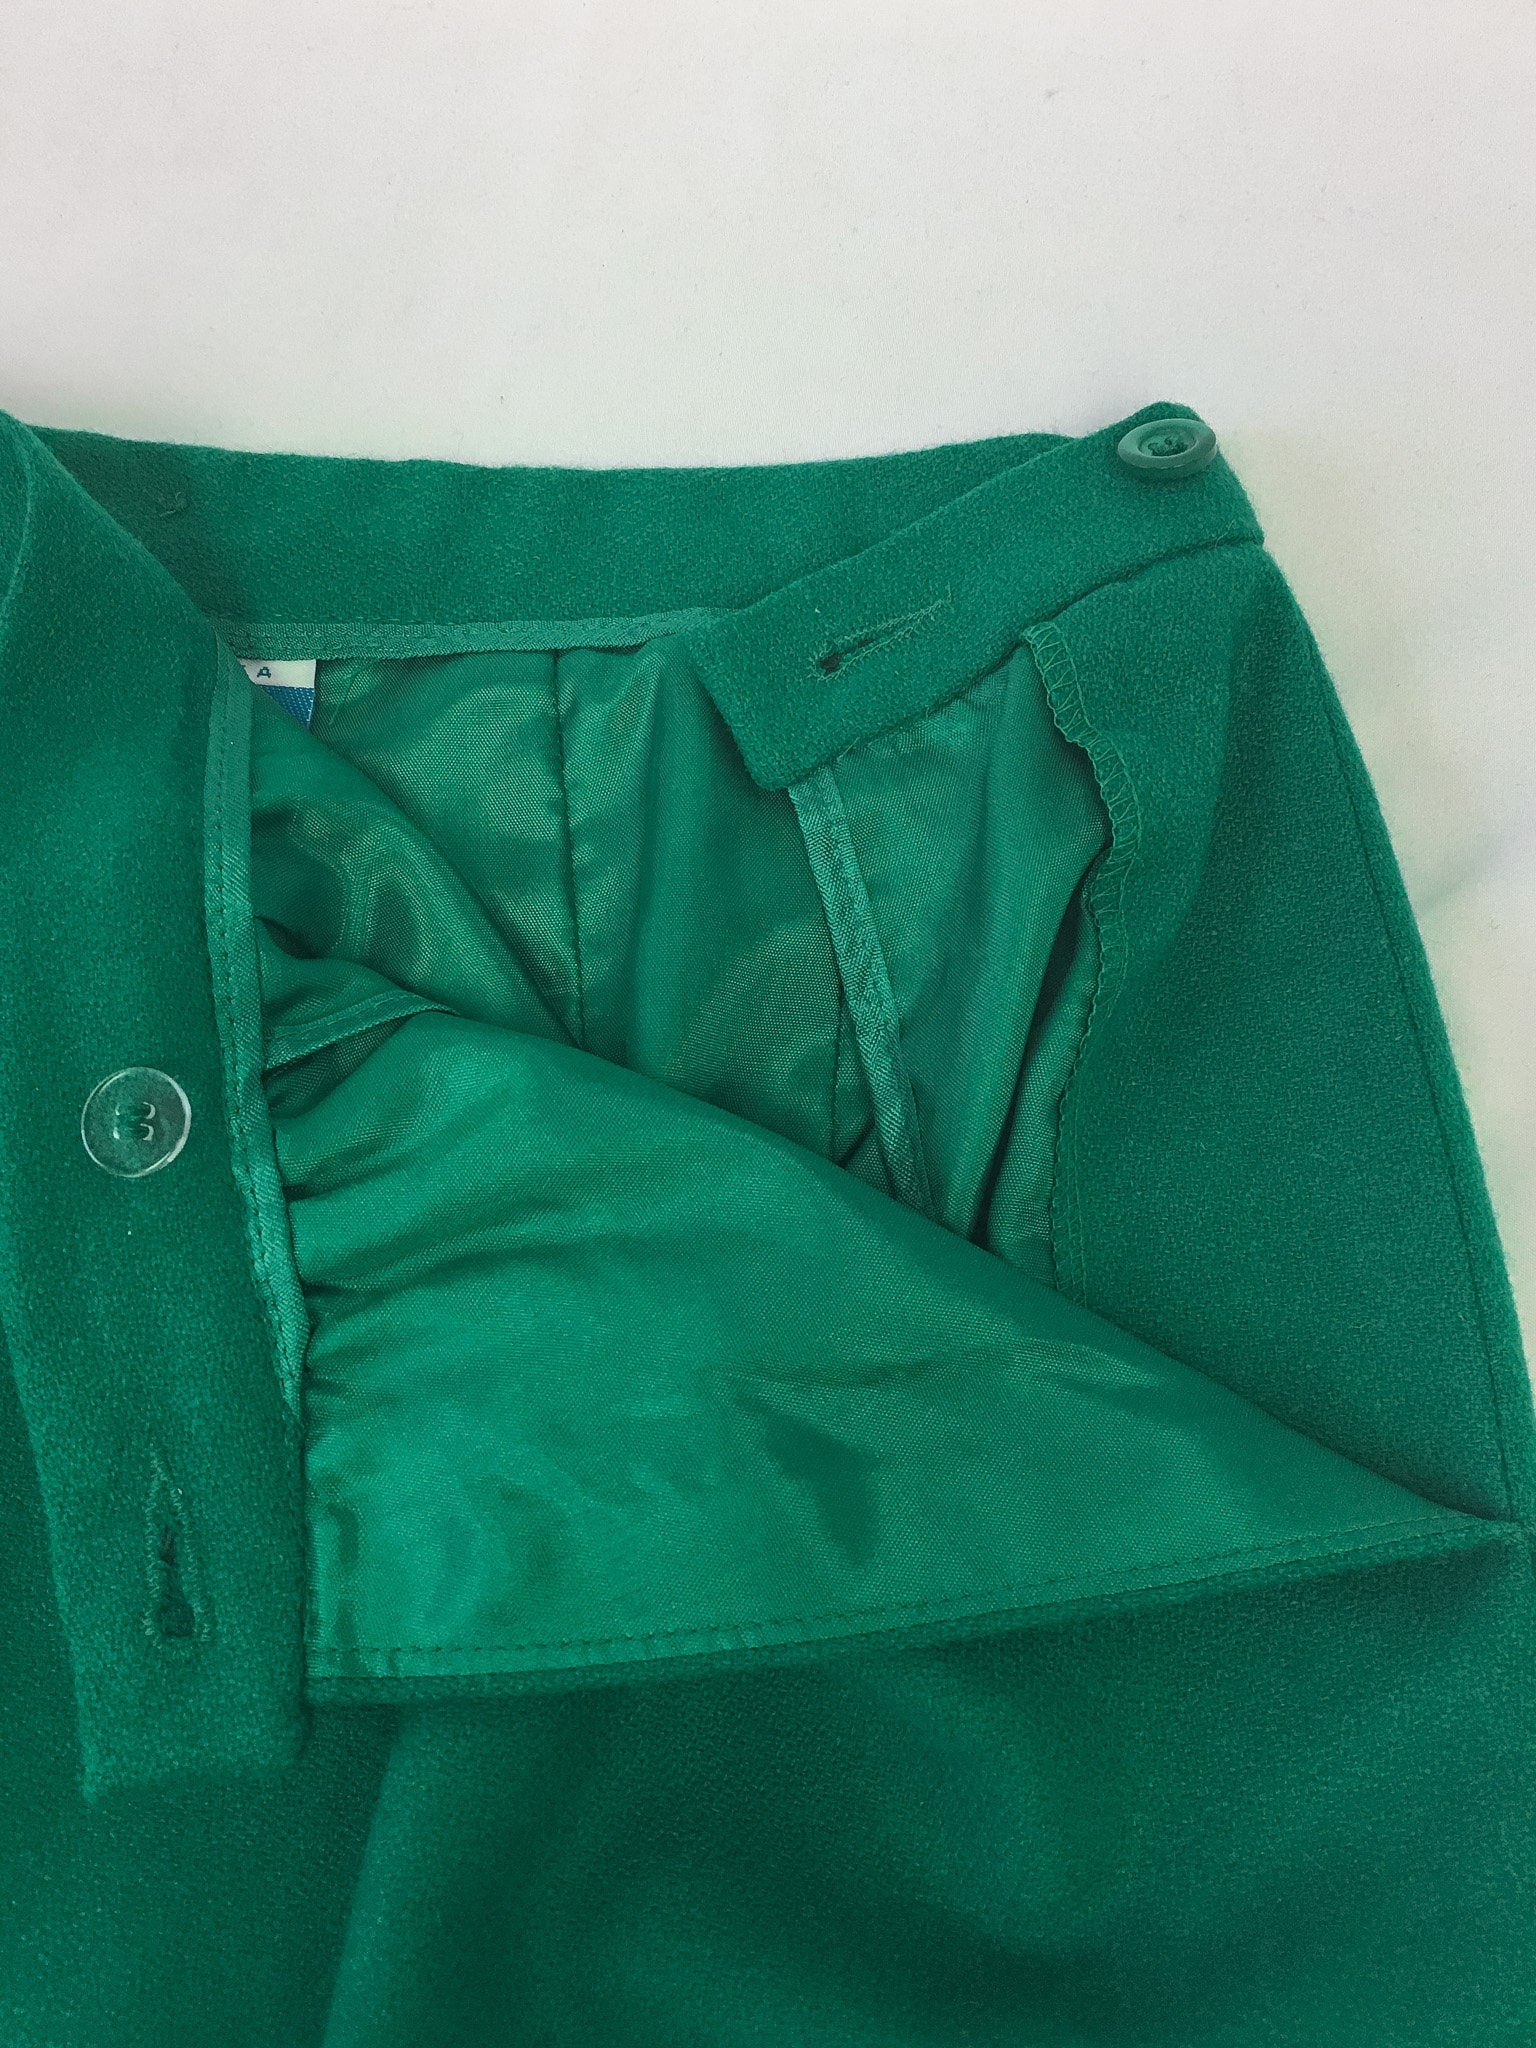 Vintage 90s Pendleton Wool Green Skirt, Sz. 8, 1990s 100% Pure Wool Skirt